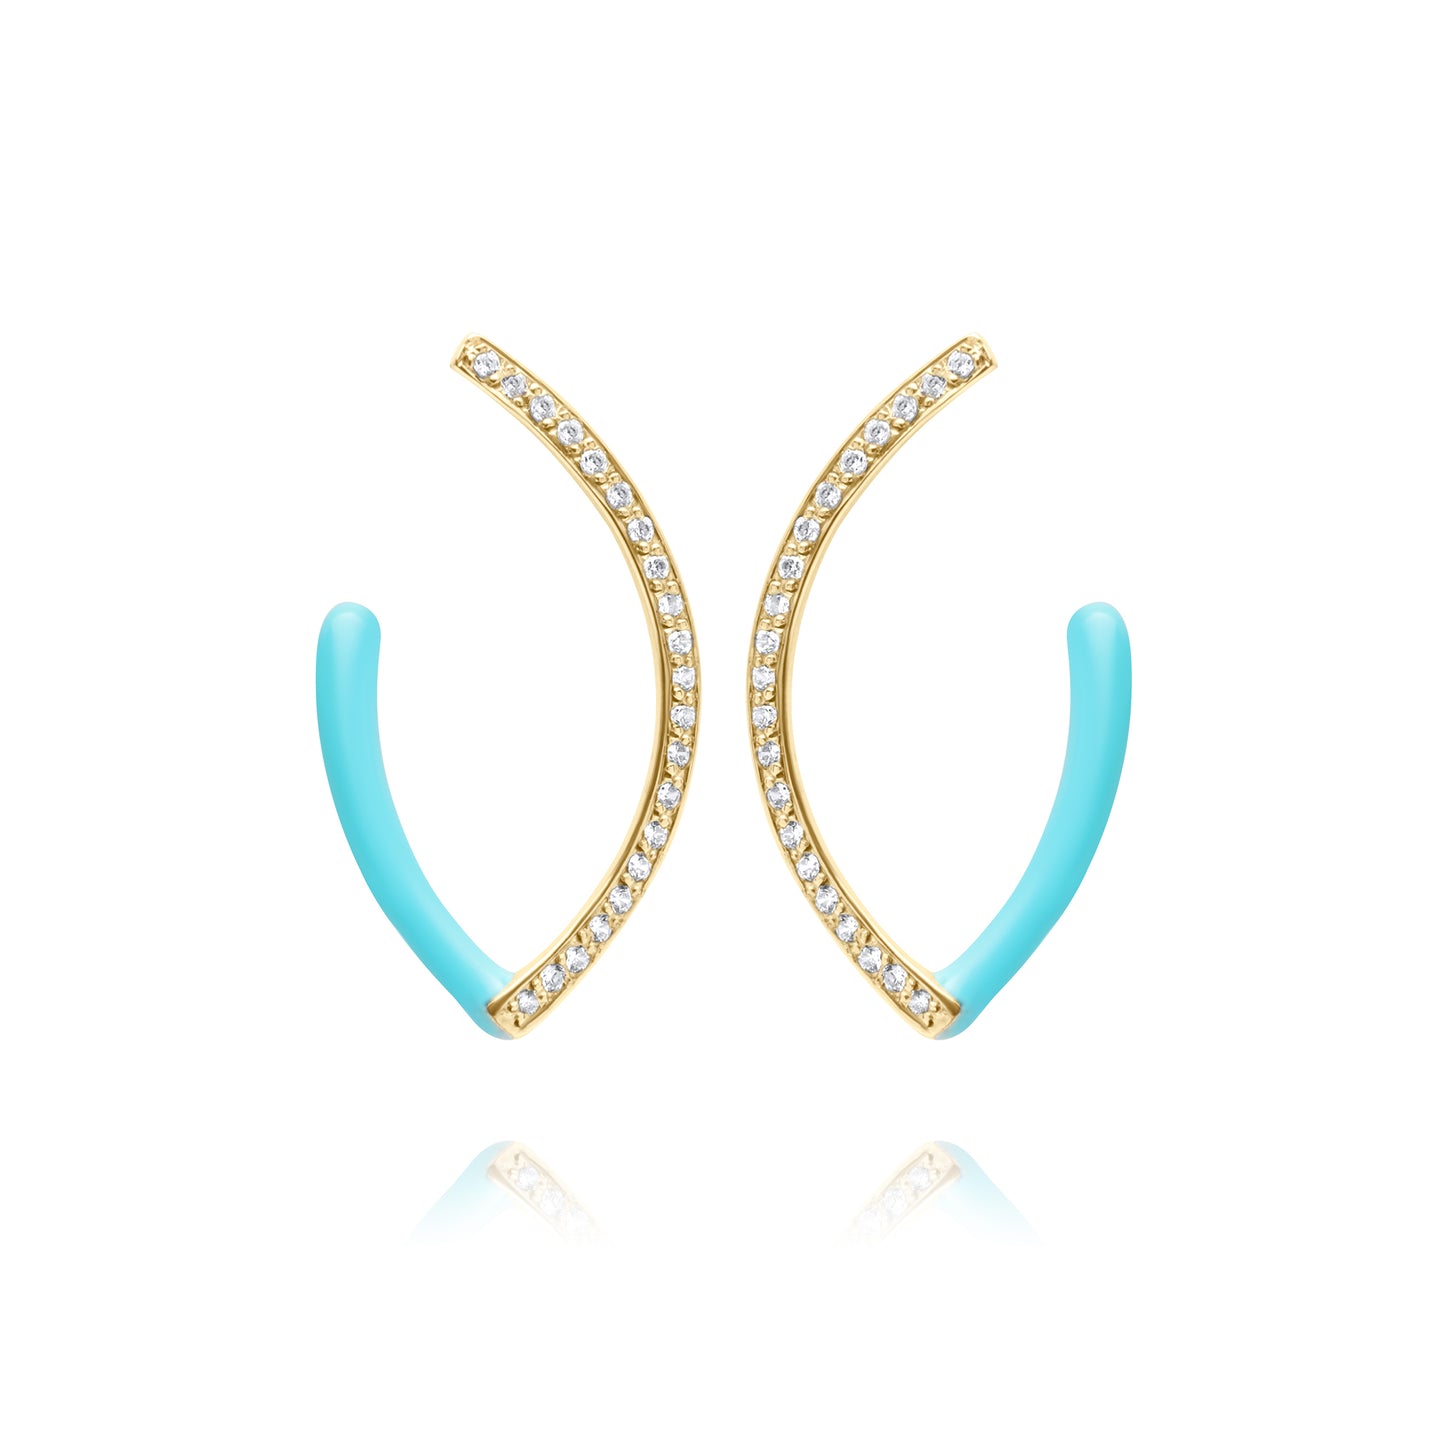 Turquoise Naveta Pair Earrings - Gold Plated